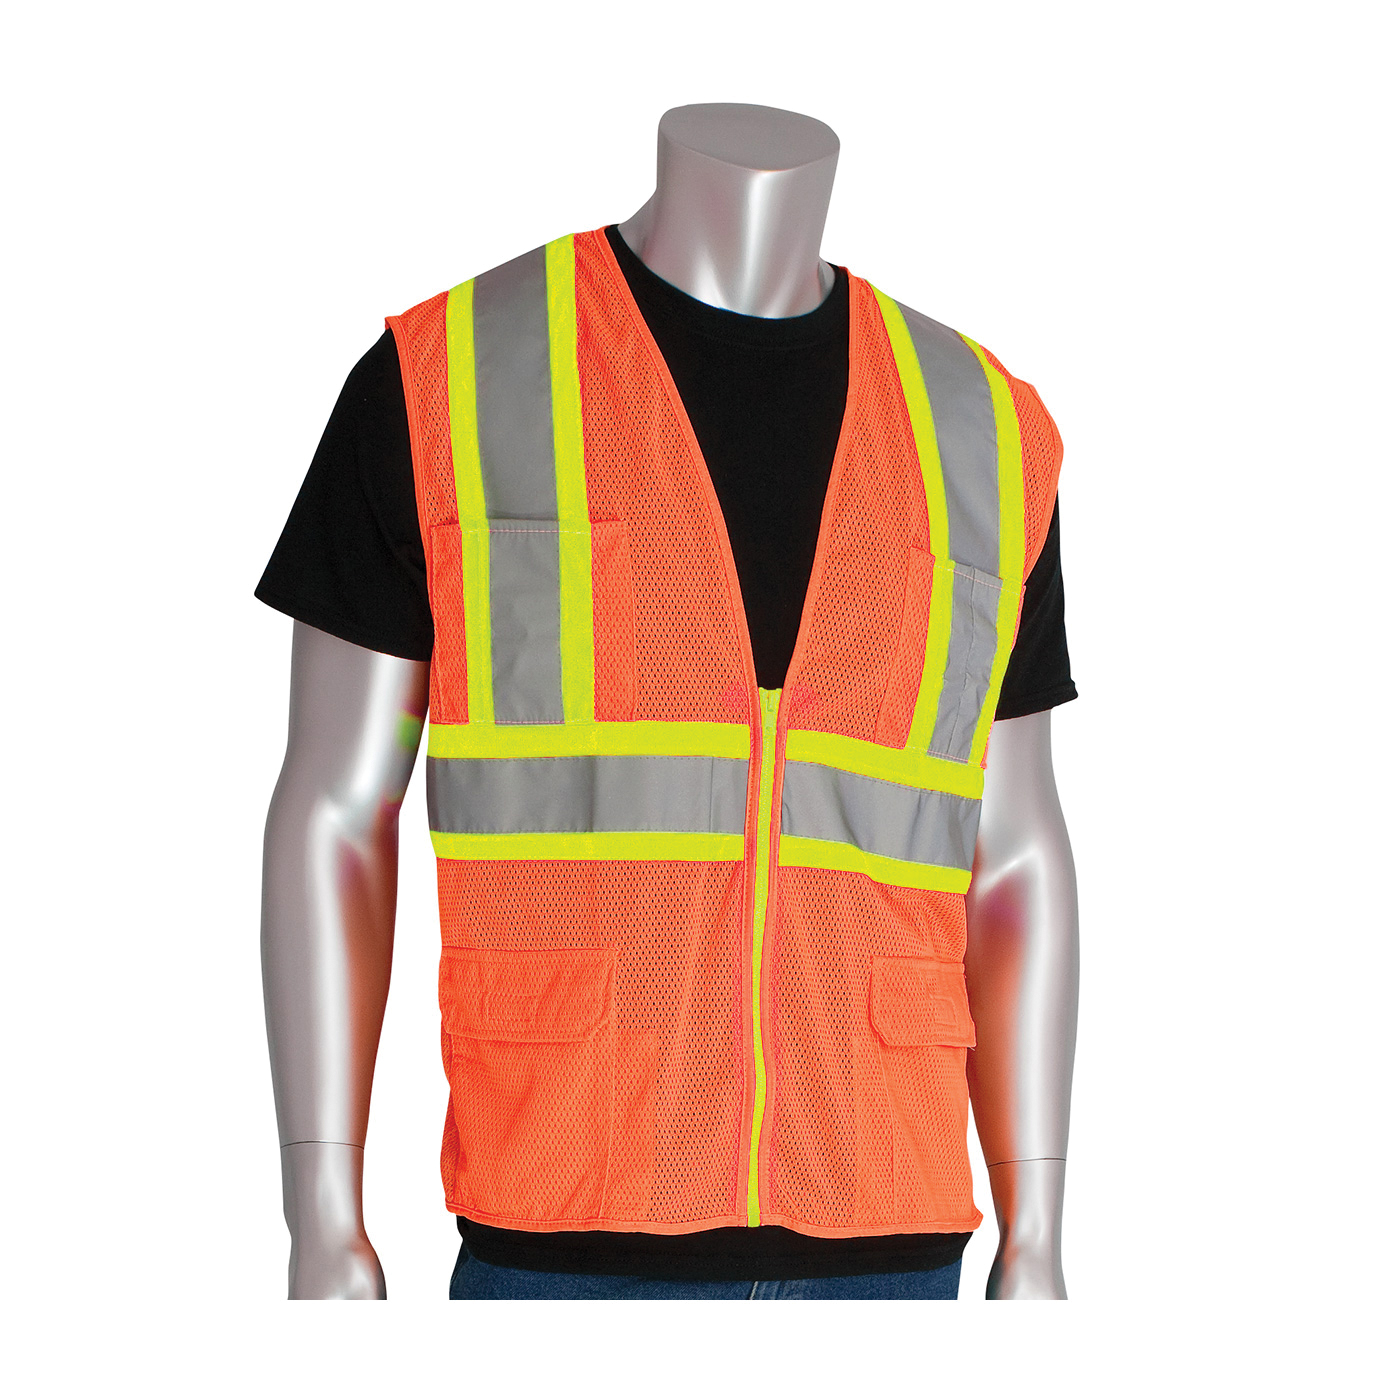 PIP® 302-MAPMOR-XL 2-Tone Premium Surveyor Safety Vest, XL, Hi-Viz Orange, Polyester, Zipper Closure, 11 Pockets, ANSI Class: Class 2, Specifications Met: ANSI 107 Type R